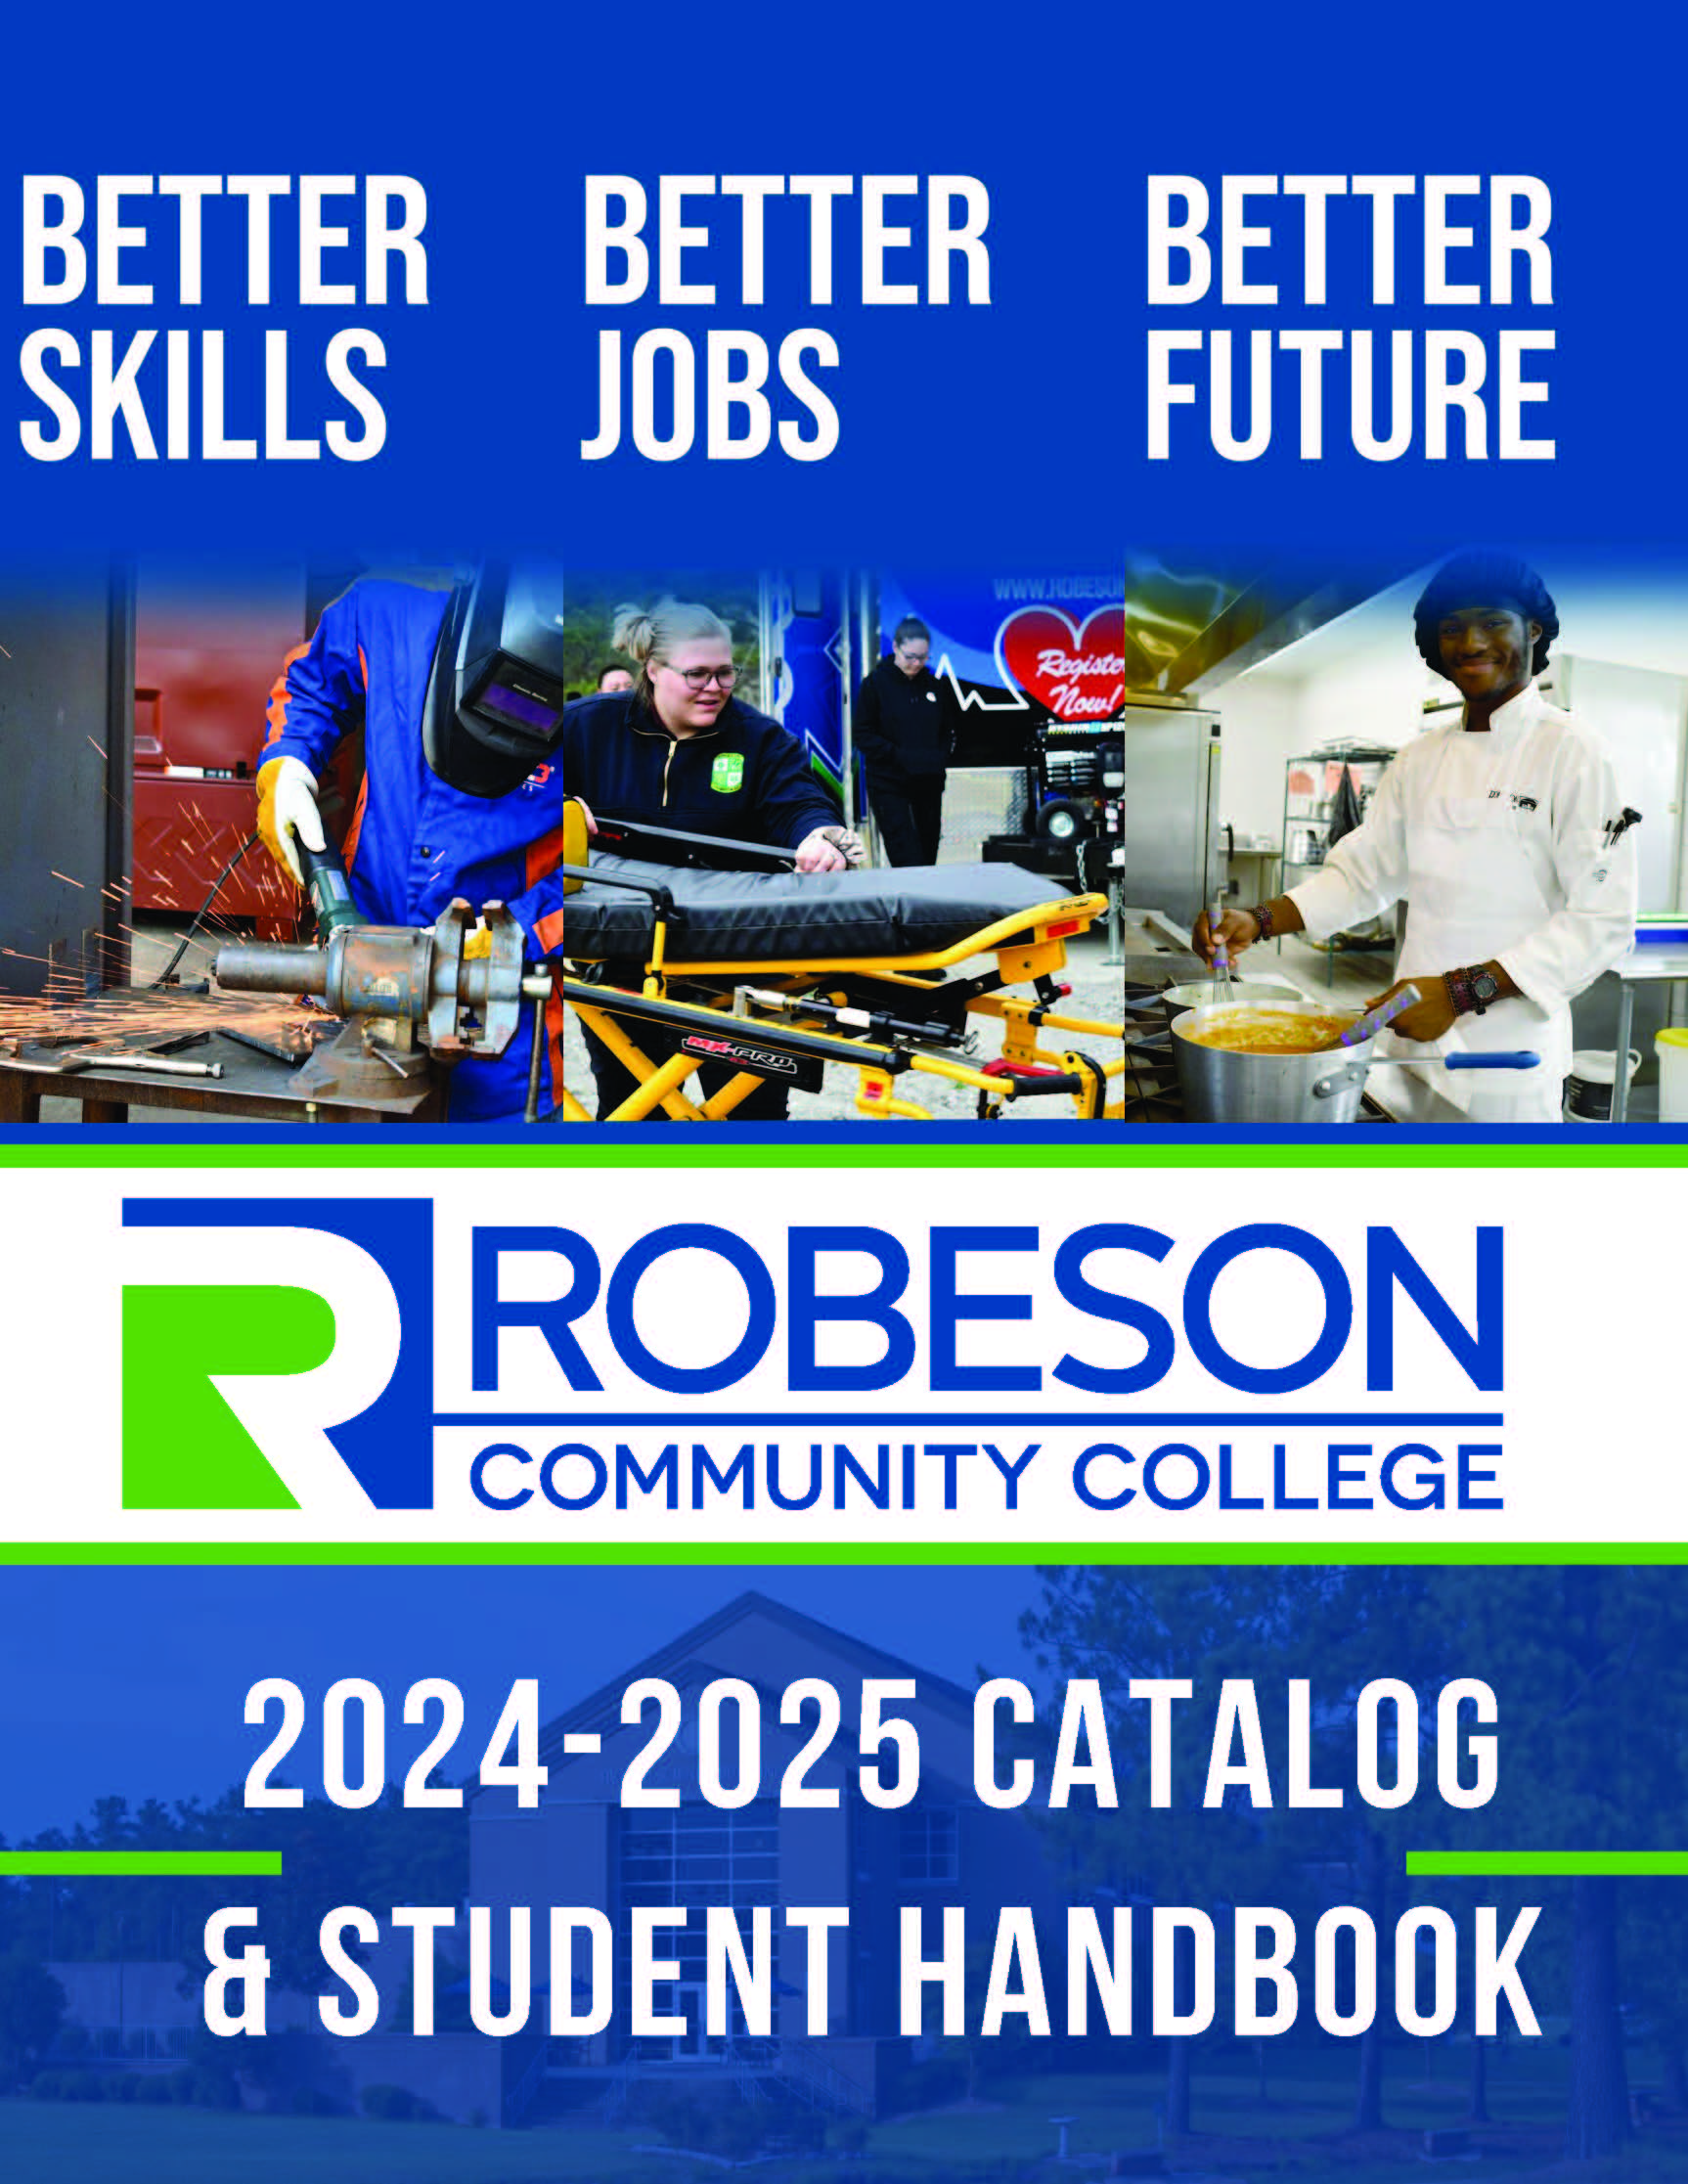 2024-2025 Catalog and Student Handbook; Better Skills, Better Jobs, Better Future